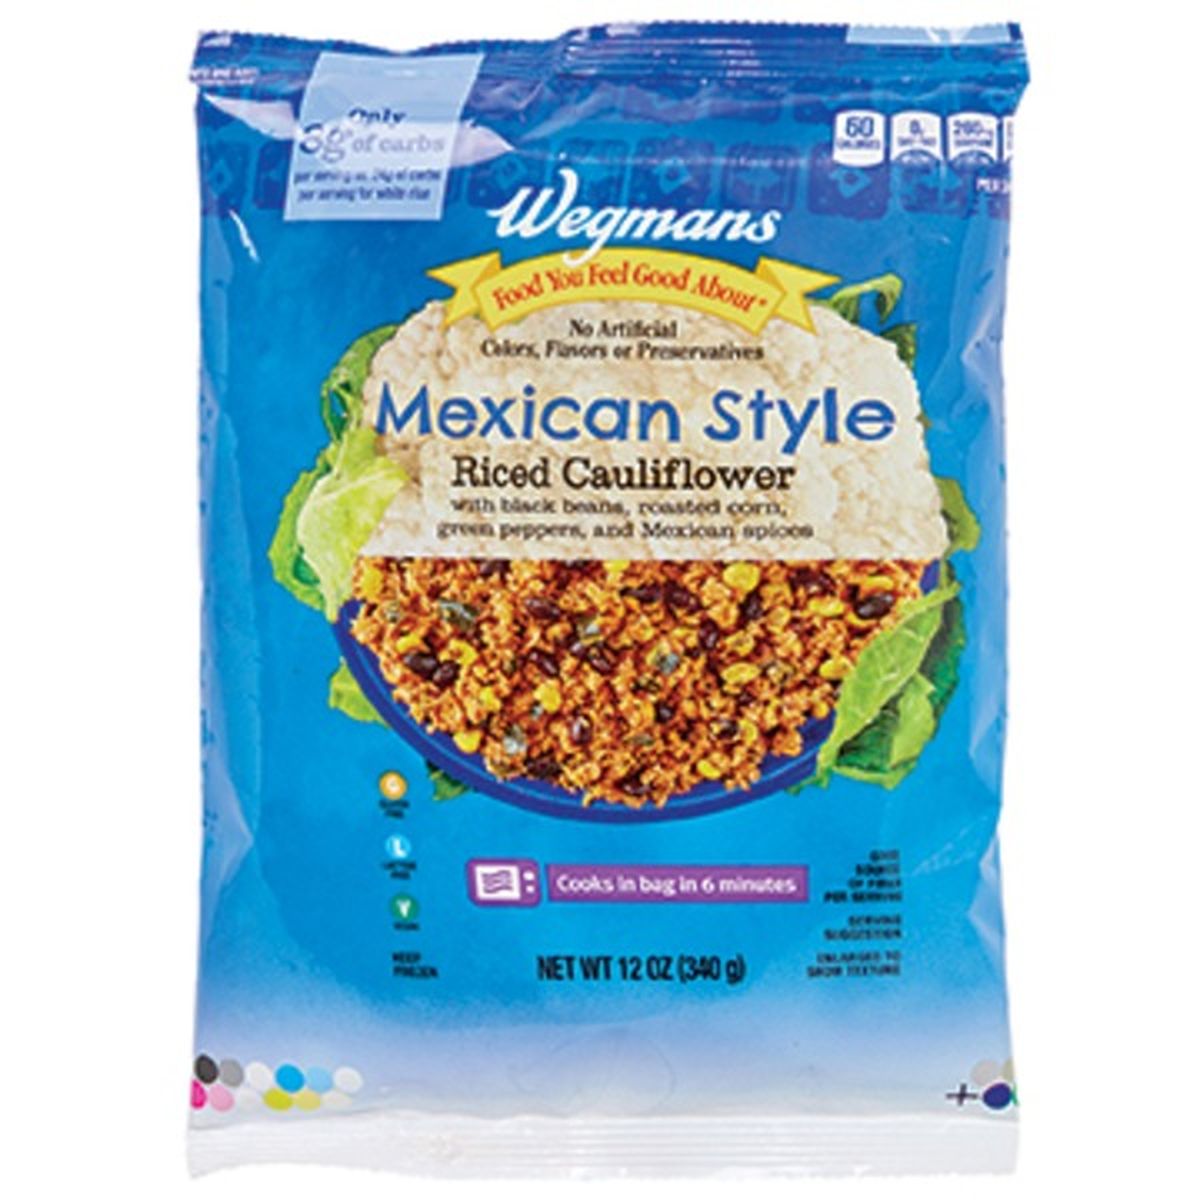 Calories in Wegmans Frozen Riced Cauliflower, Mexican Style